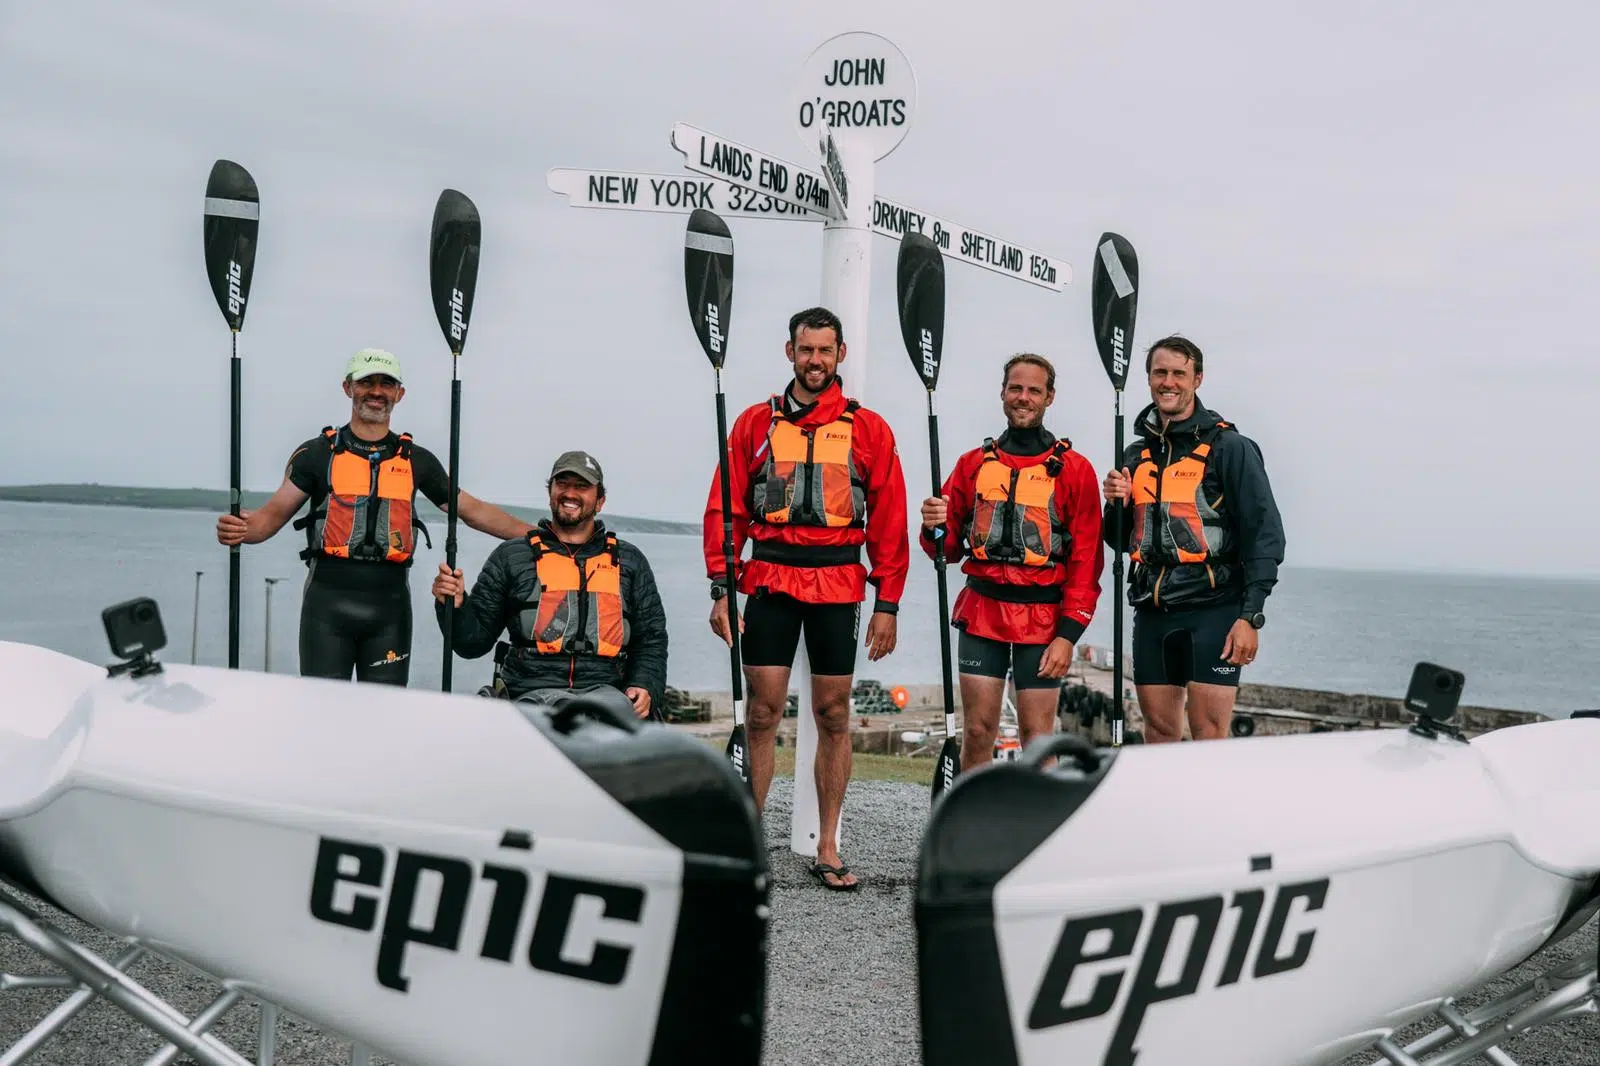 Kayak challenge raises over 100k for charity